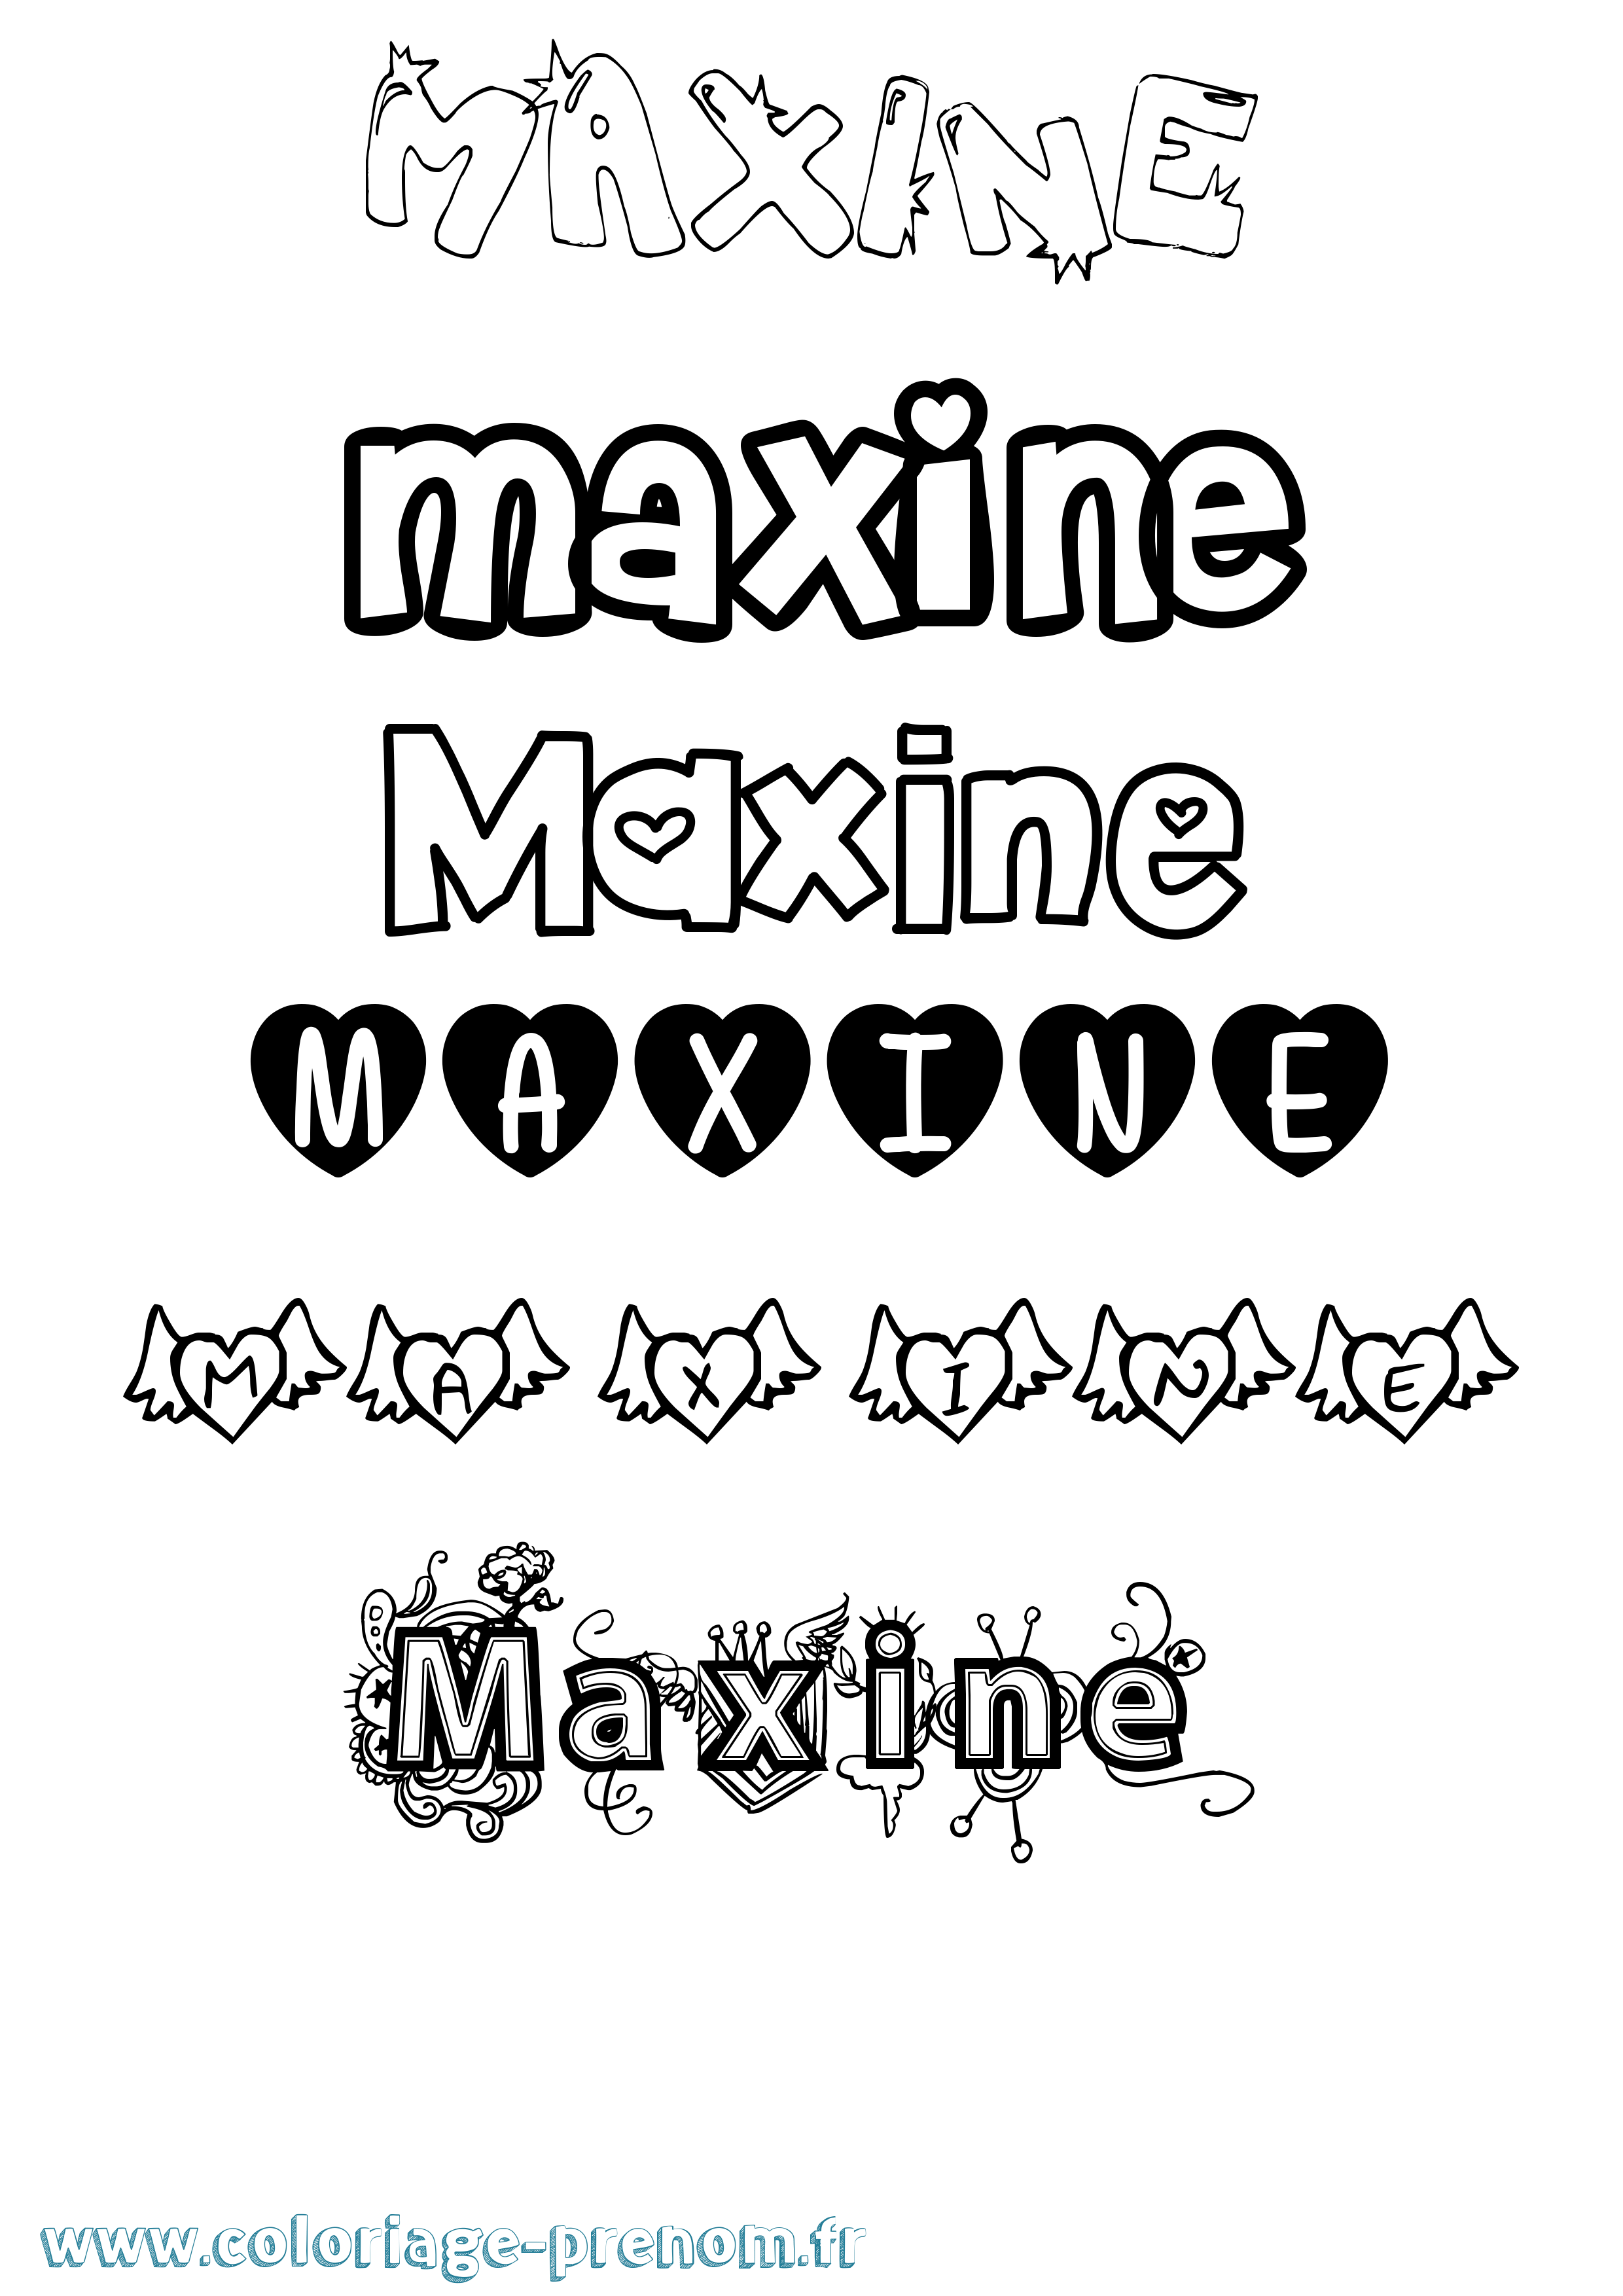 Coloriage prénom Maxine